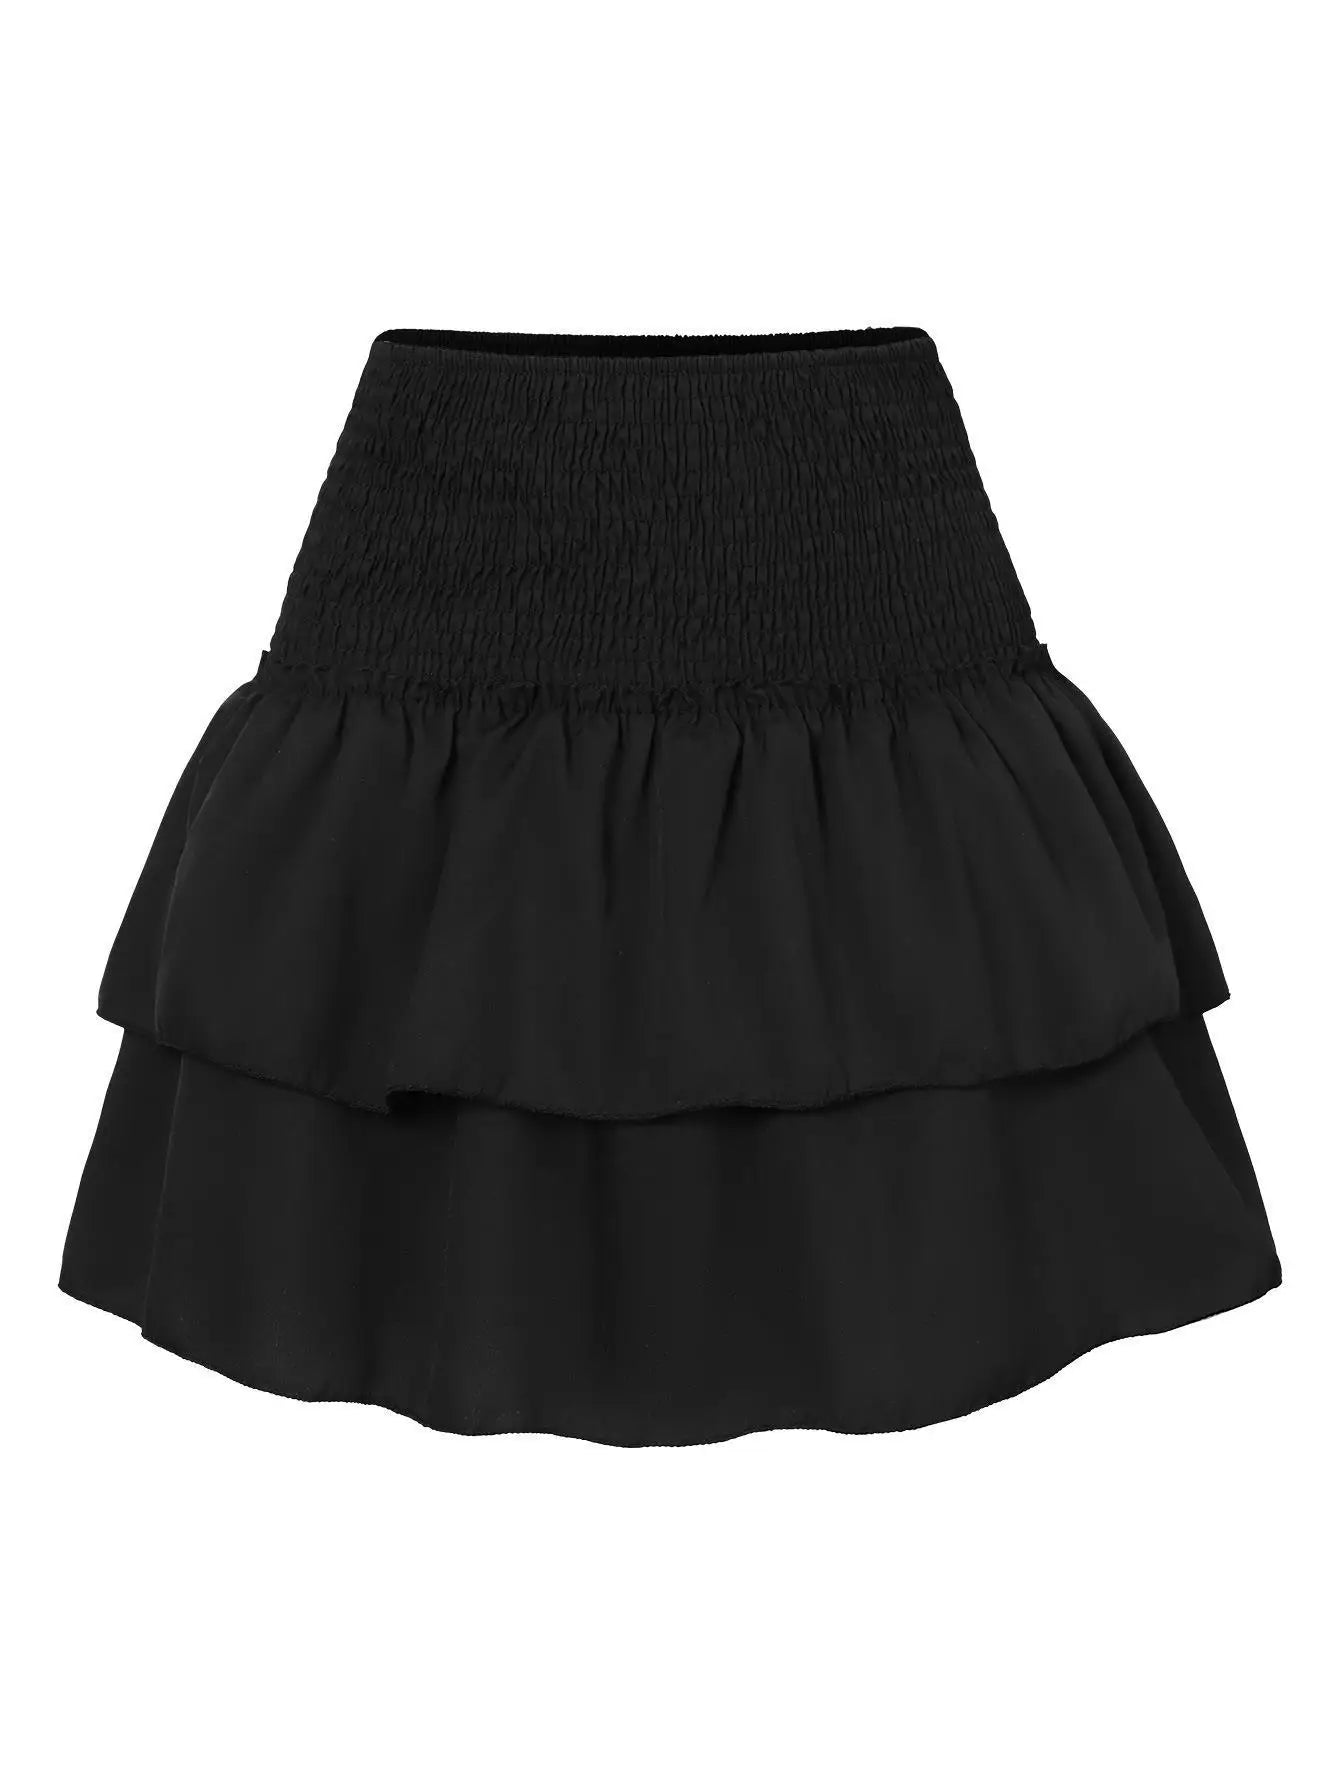 Mini Skirts- Express Your Style in Vibrant Layered Mini Skirt- Black- Pekosa Women Fashion